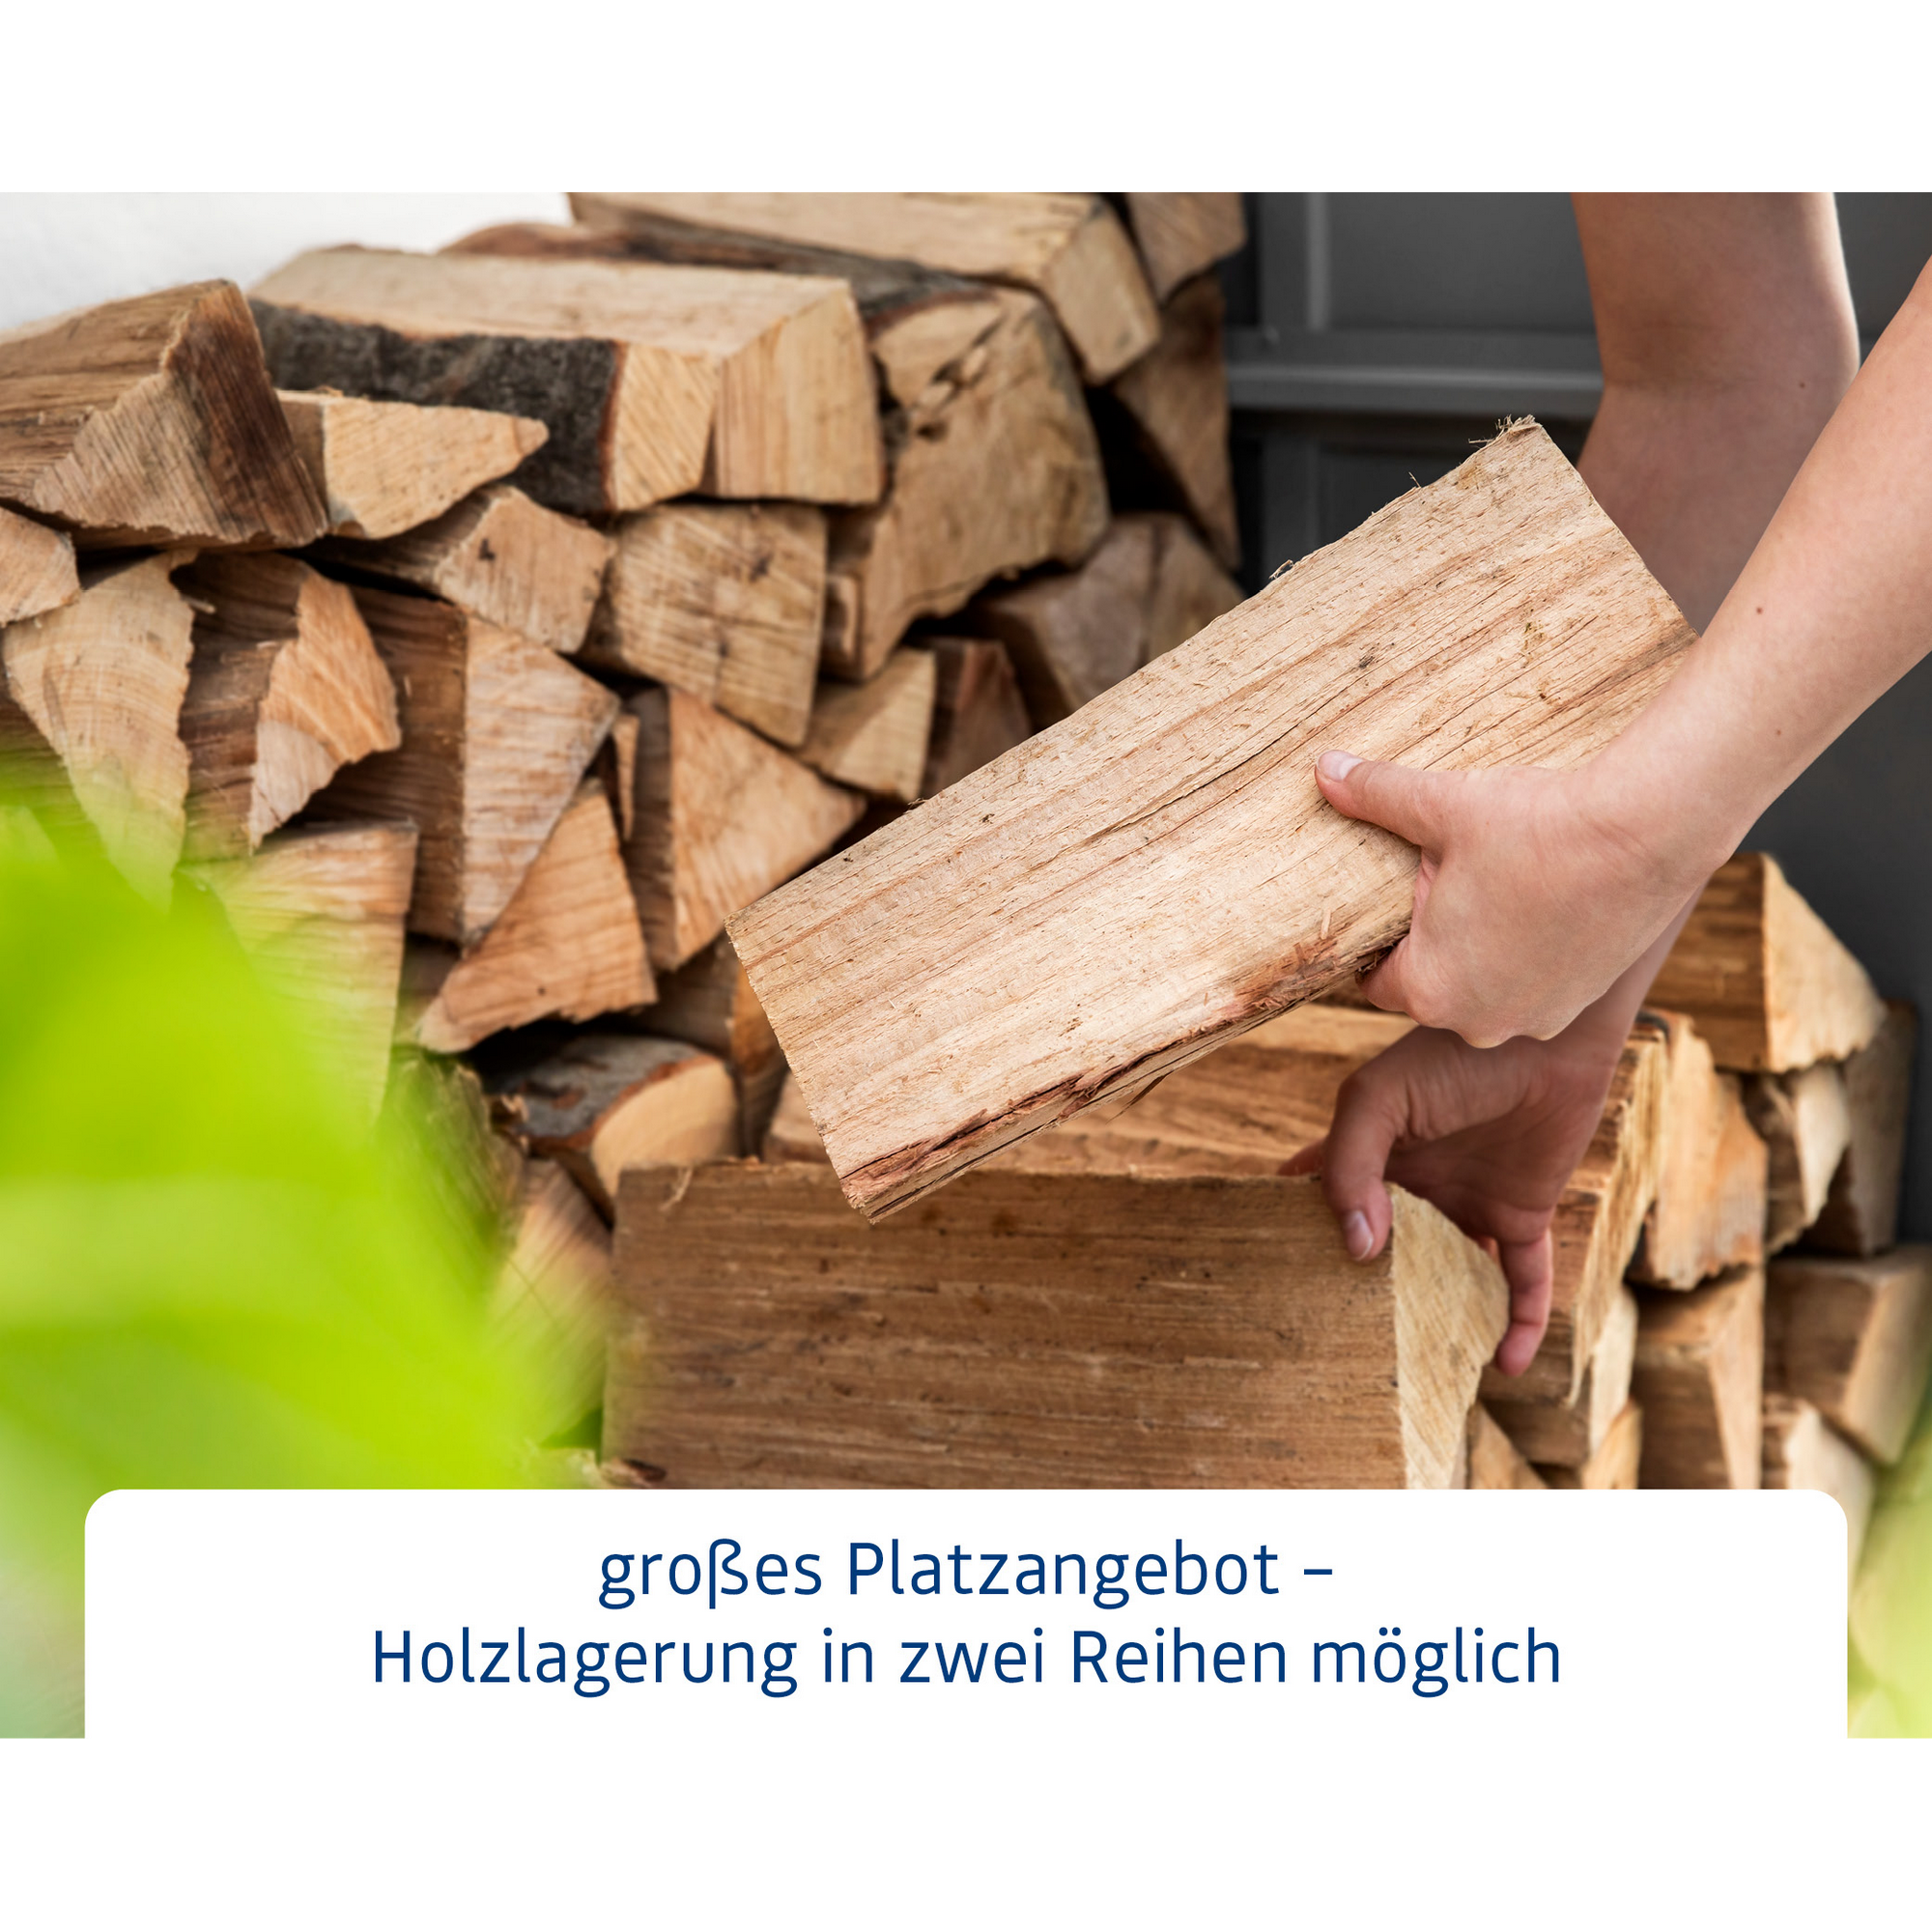 Kaminholzregal 'TrendTyp 1' moosgrün 102,5 x 122,7 x 198 cm + product picture